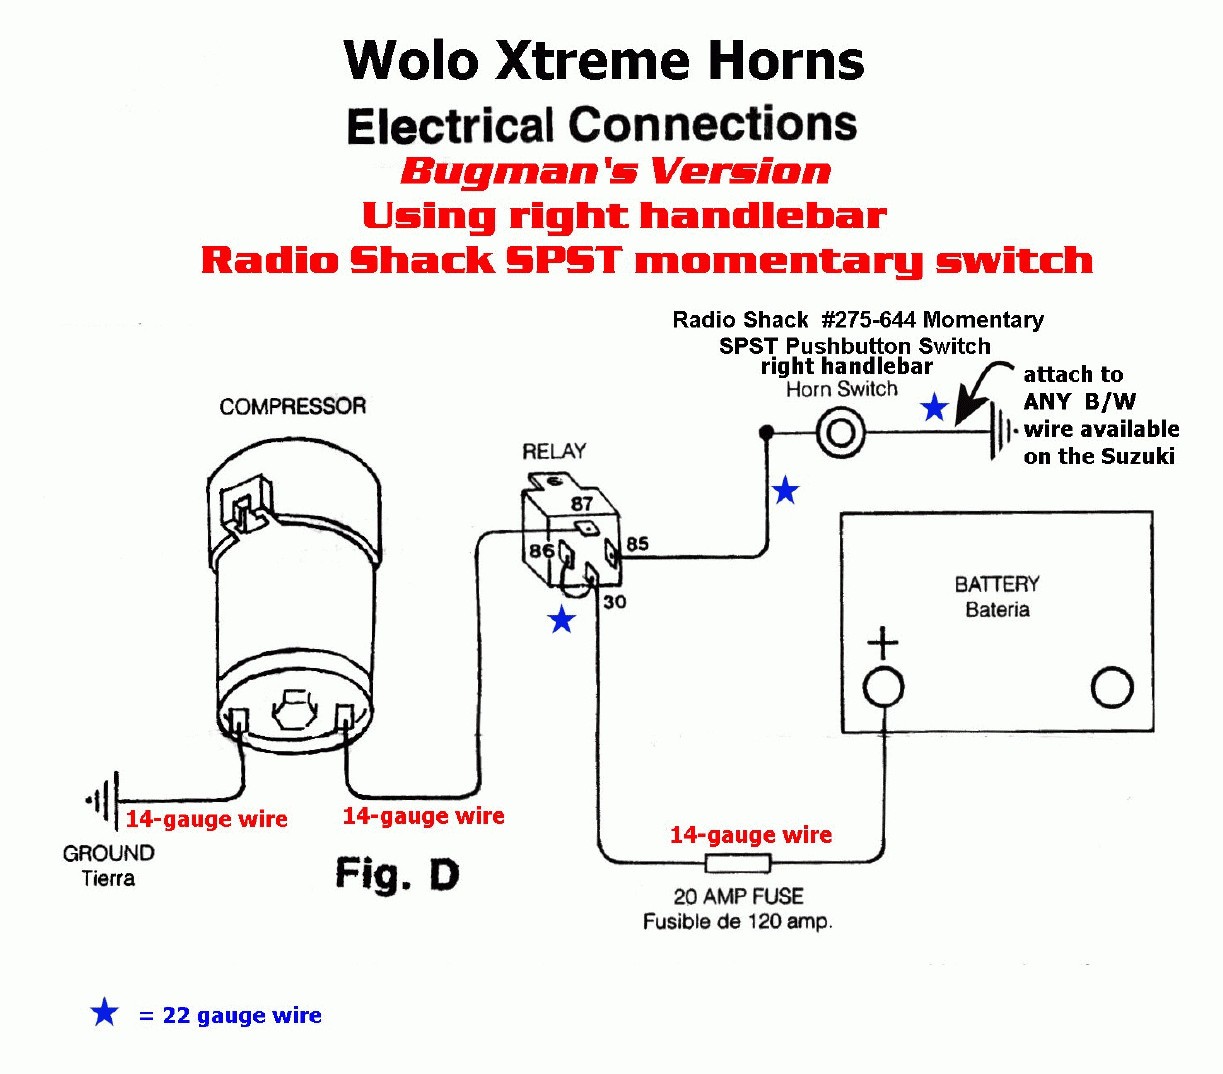 replacement horn button wiring diagram wire center u2022 rh marstudios co Car Horn Schematic Horn Button Diagram